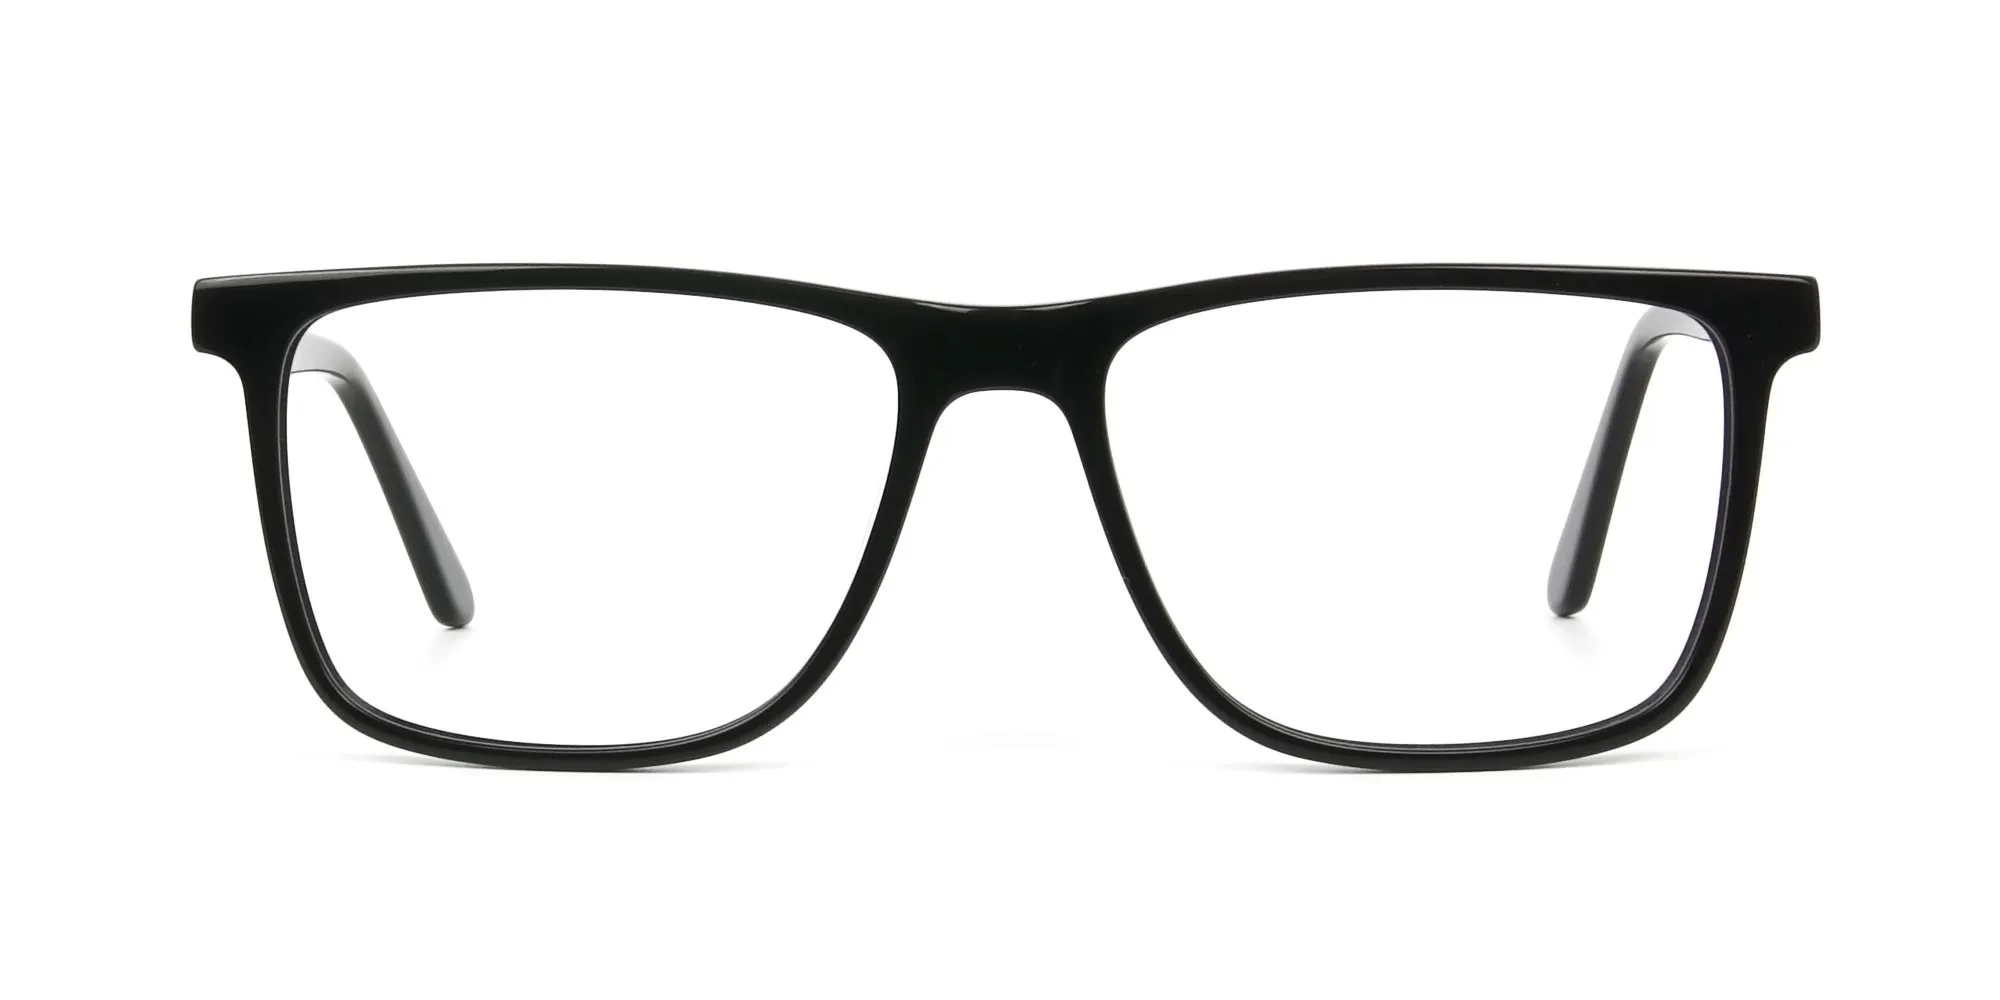 Black & Grey Rectangular Glasses in Acetate - 2